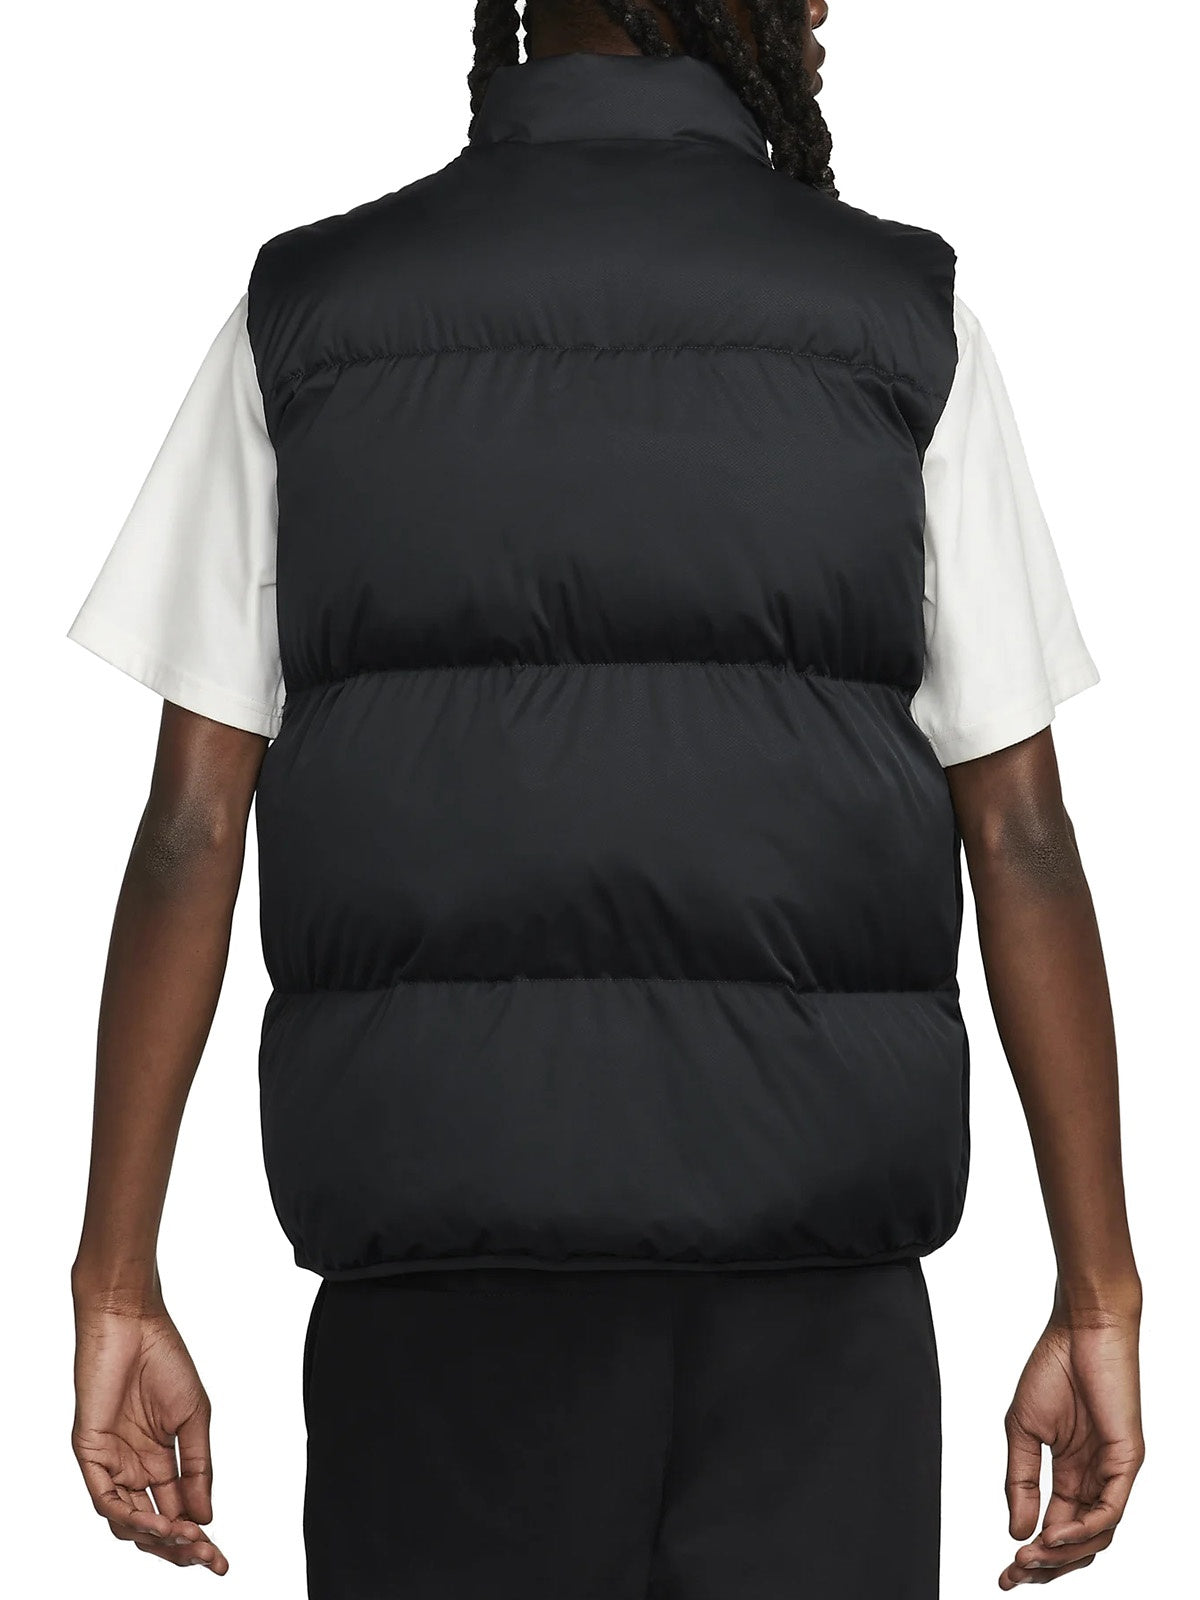 Gilet Uomo Nike - Primaloft® Club Puffer Vest - Nero